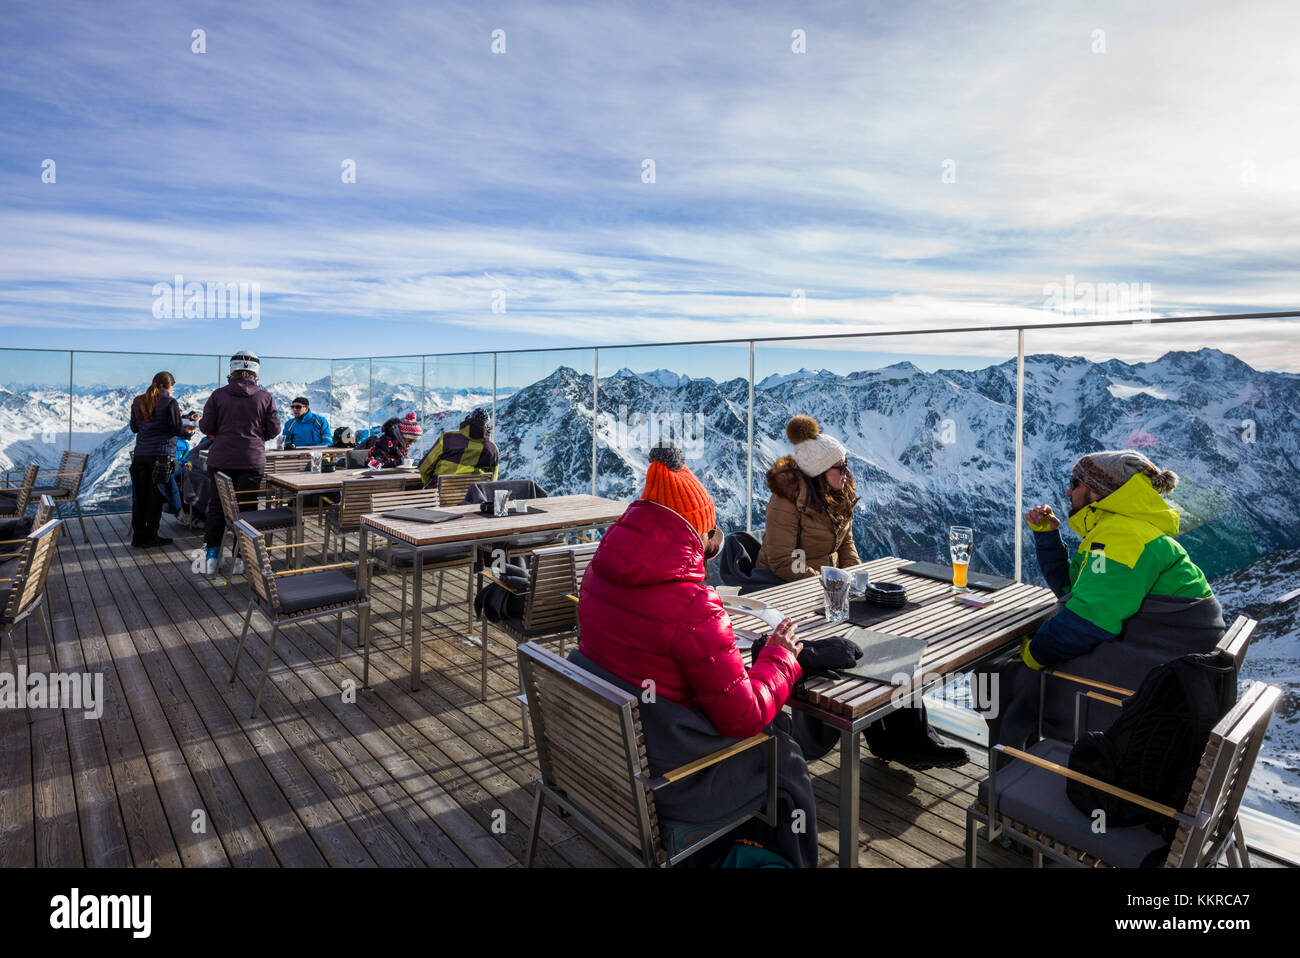 Austria, Tyrol, Otztal, Solden, Gaislachkogl ski mountain, Gaislachkogl Summit, elevation 3058 meters, Ice Q gourmet restaurant, outdoor dining, winter Stock Photo